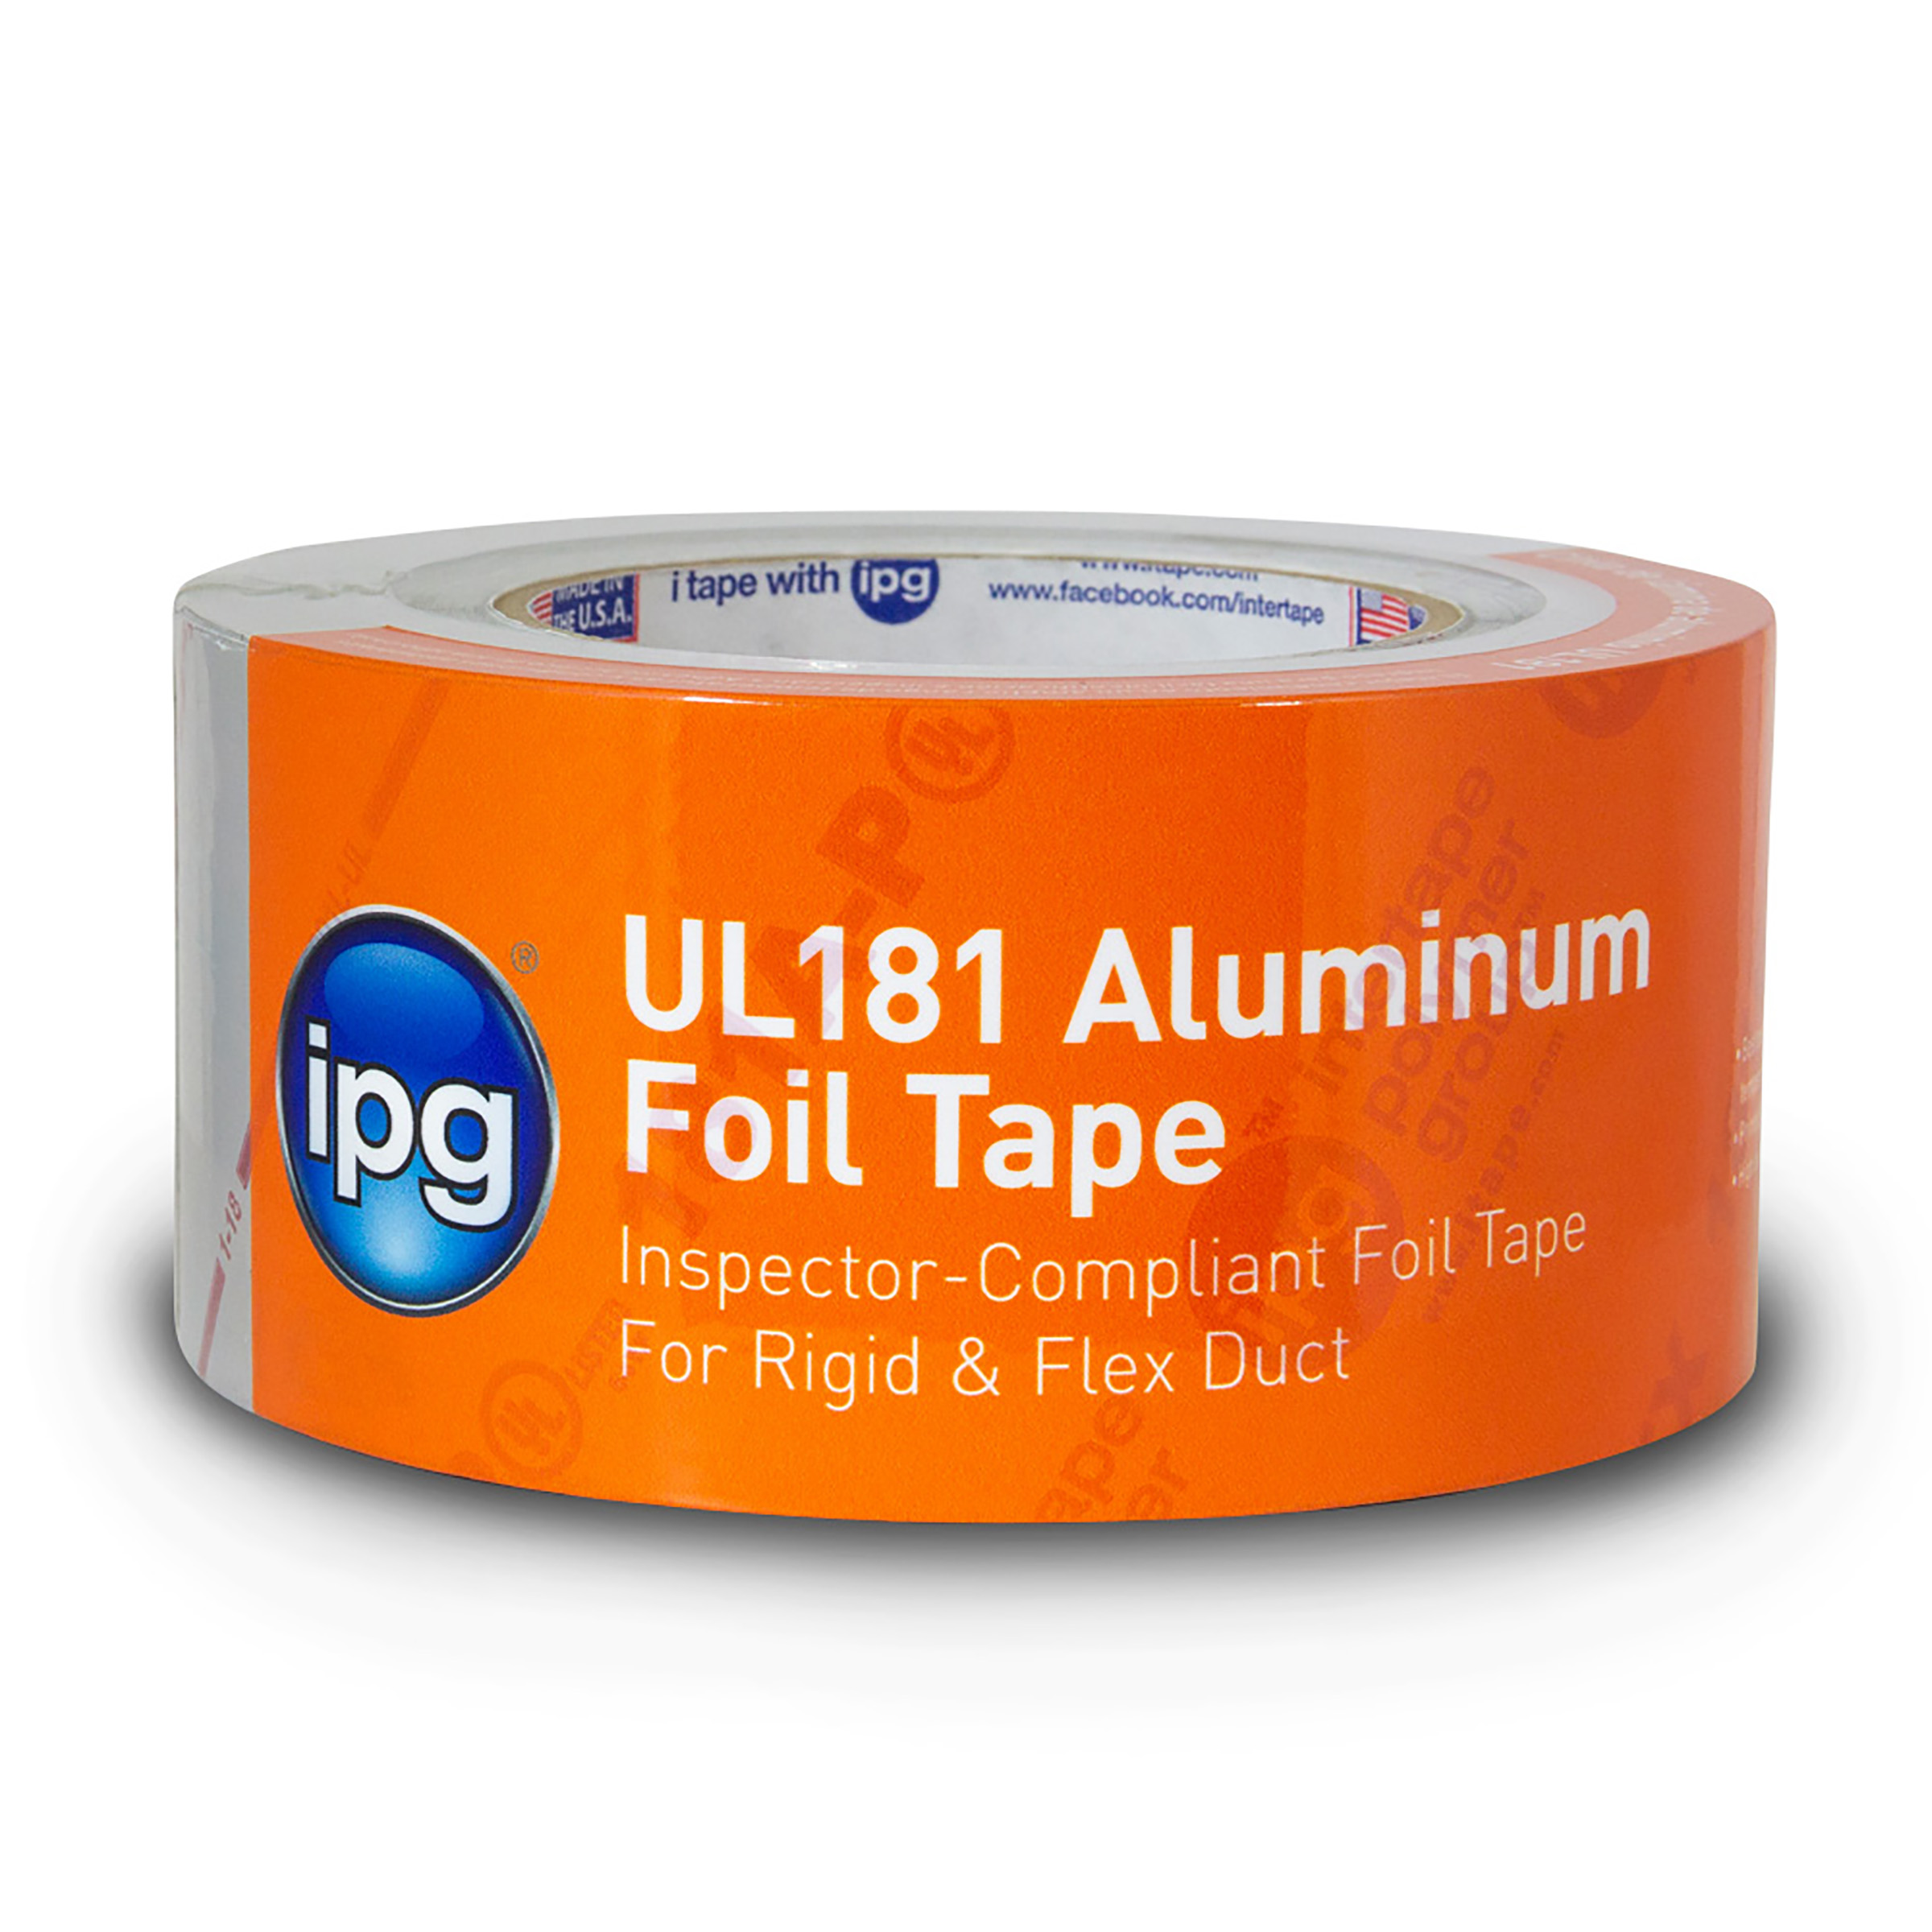 Aluminum Vapor Barrier Foil Wrapping & Packaging Services — Clen Co